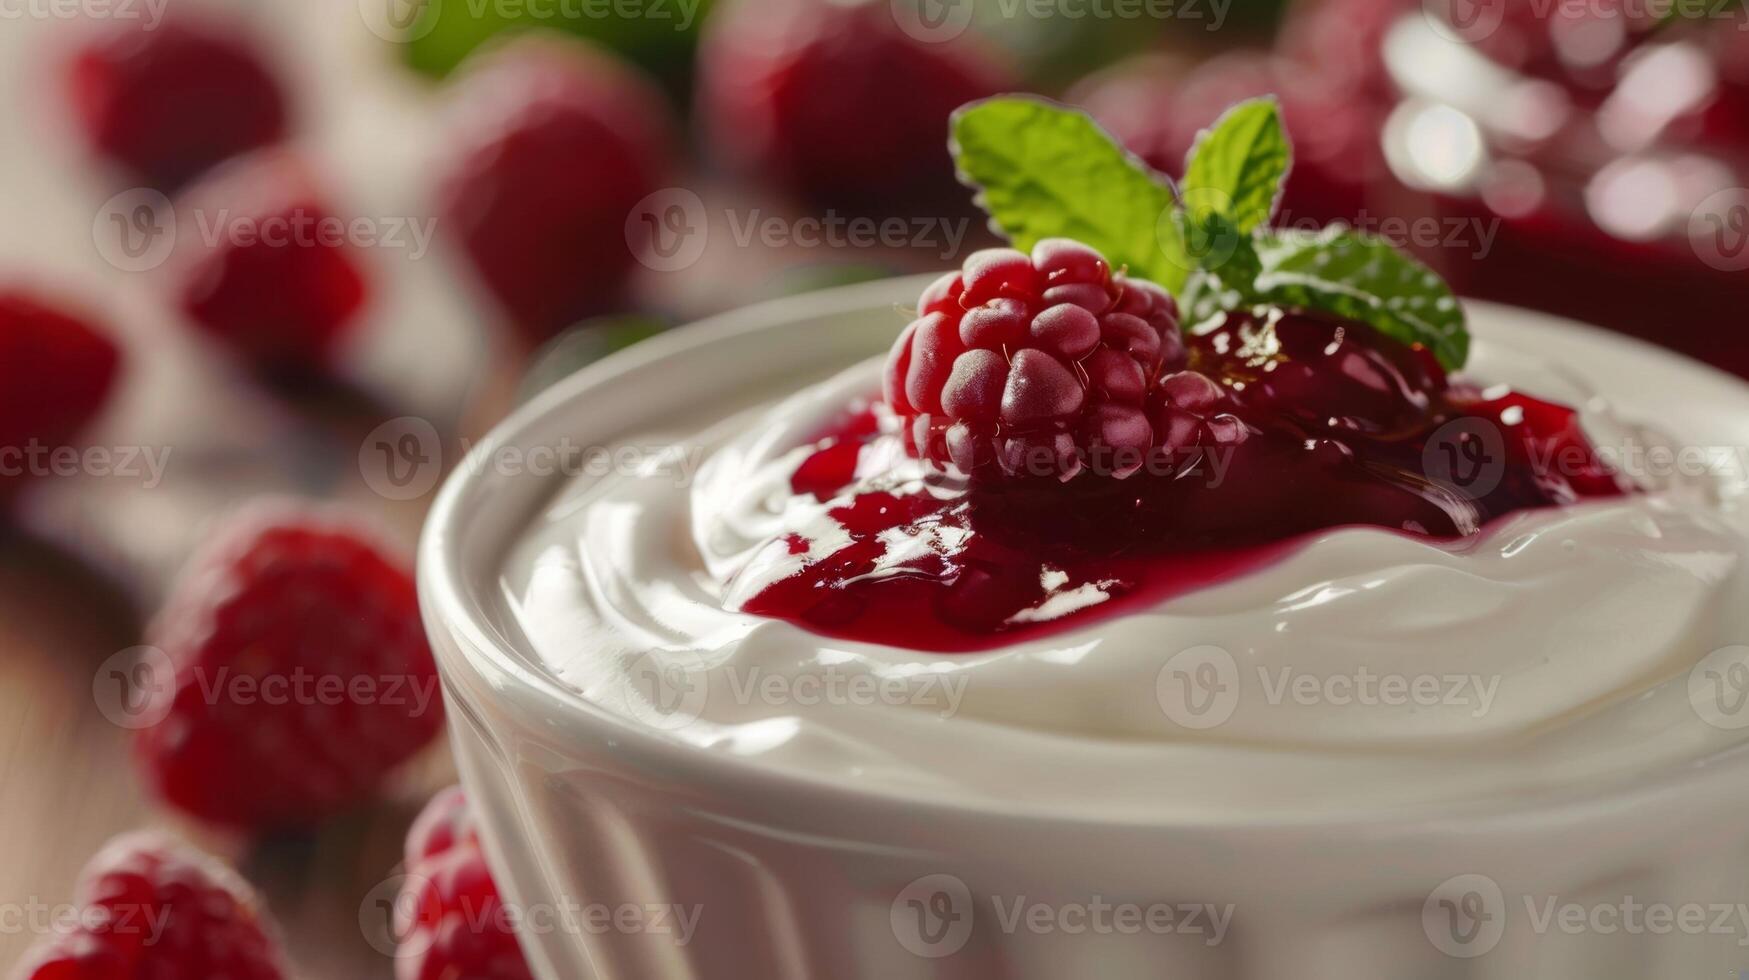 Tasty yoghurt with jam as background, closeup photo